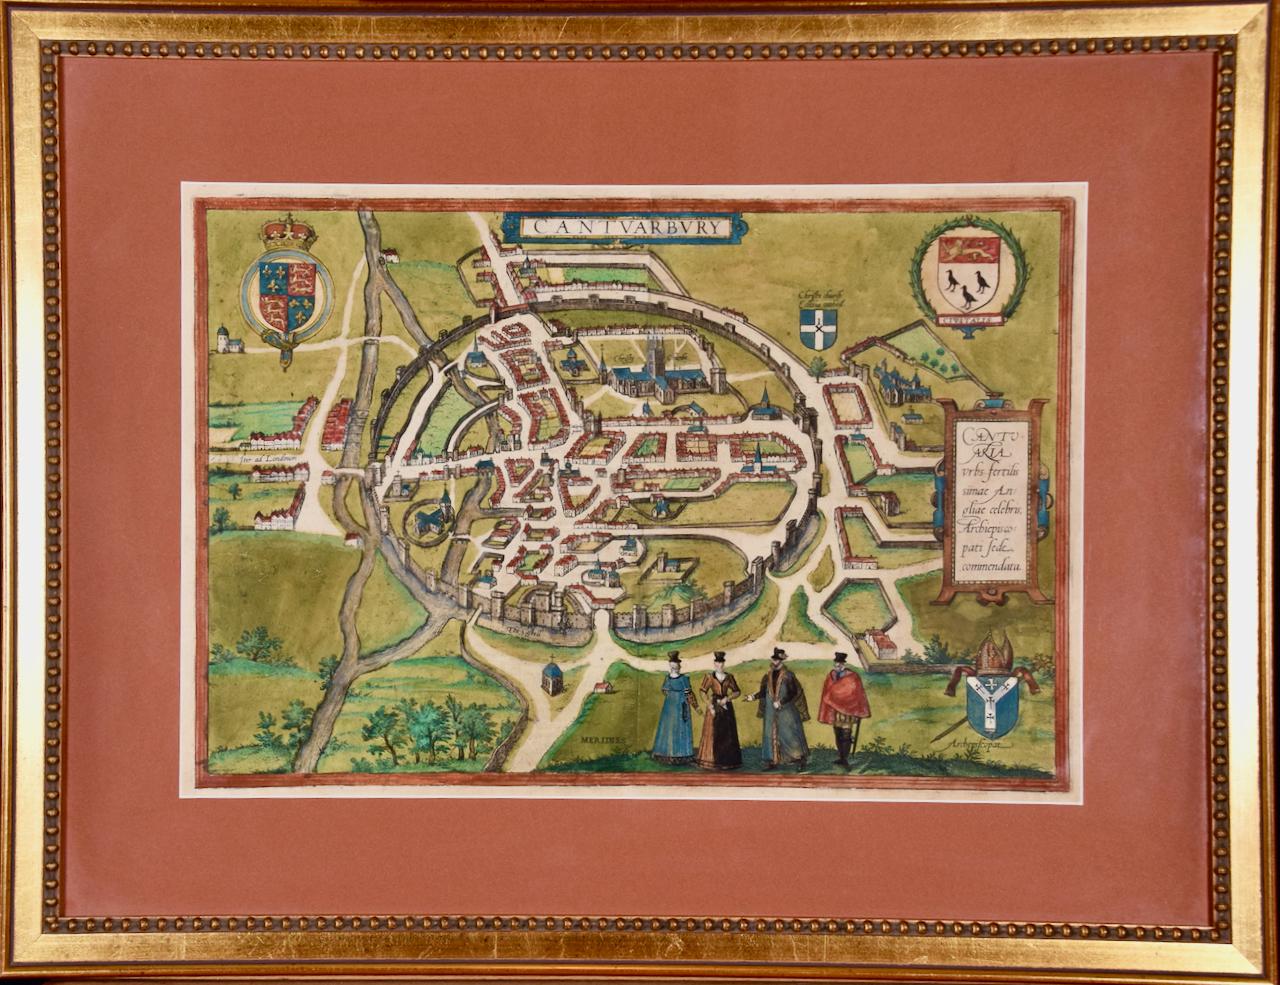 Canterbury: An Original 16th C. Framed Hand-colored Map by Braun & Hogenberg - Print by Frans Hogenberg